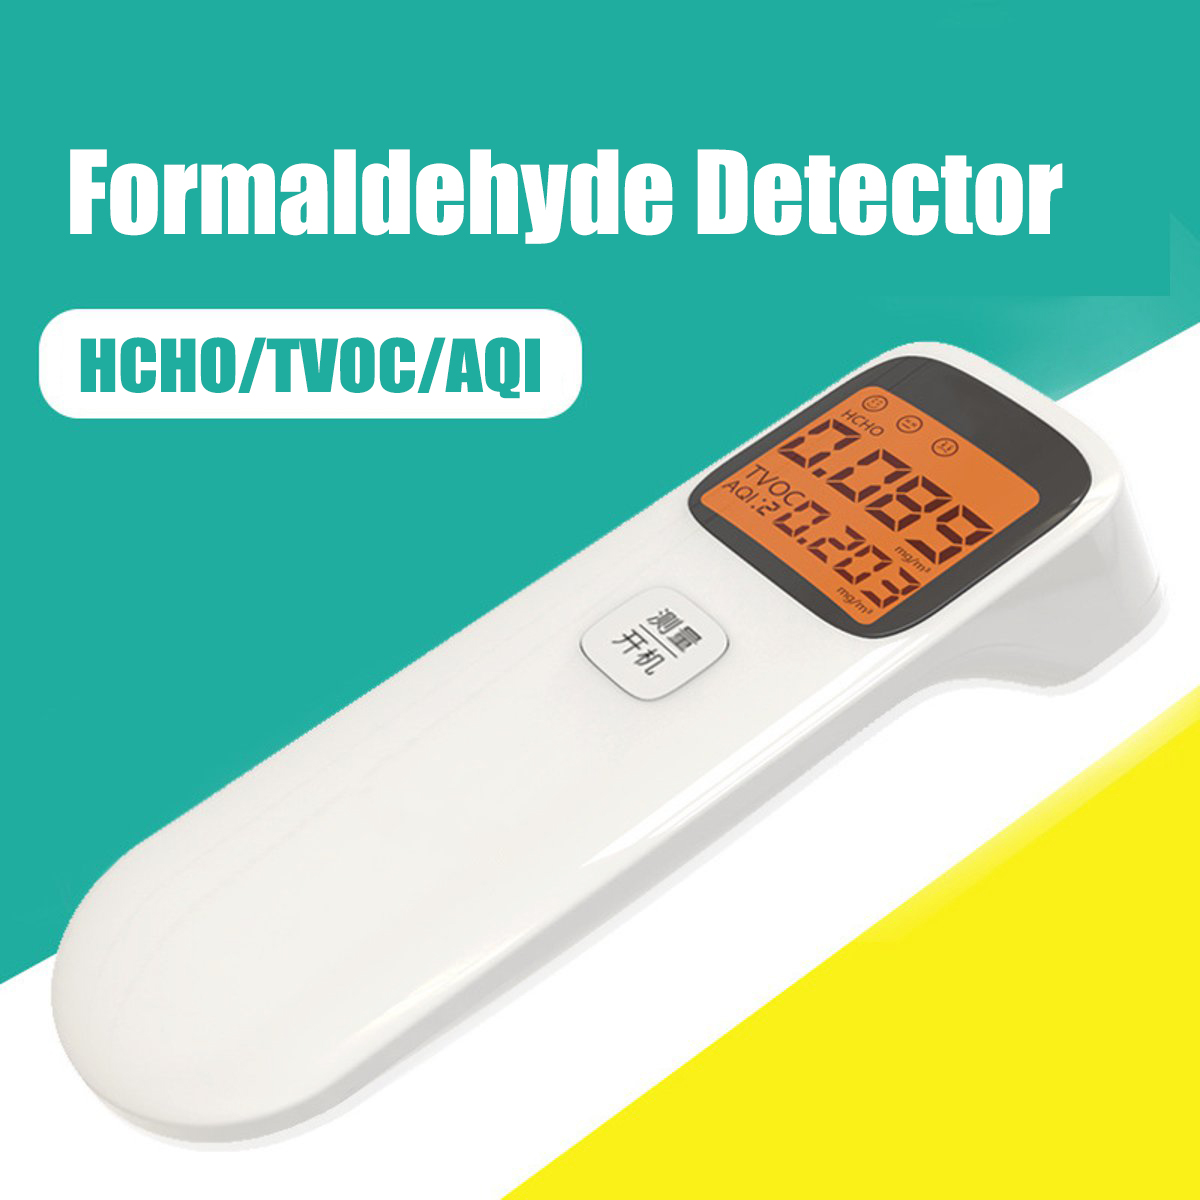 Smart-Air-Formaldehyde-Gas-Tester-Monitors-Tester-For-HCHOTVOCAQI-Detection-1468235-3